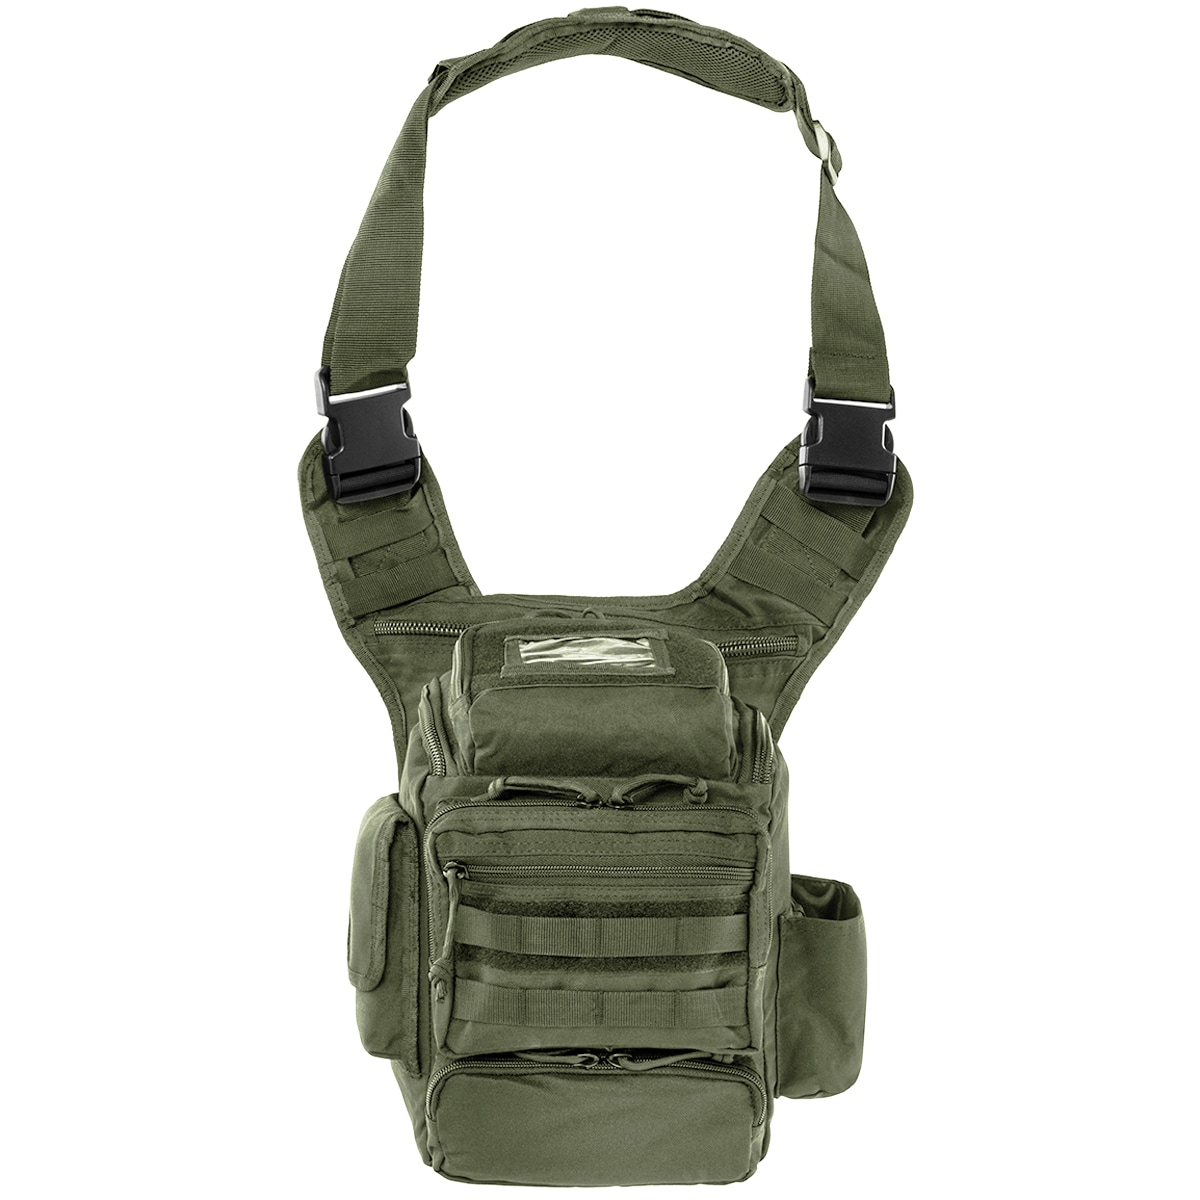 Сумка Voodoo Tactical Padded Concealment Bag 5 л - Olive Drab